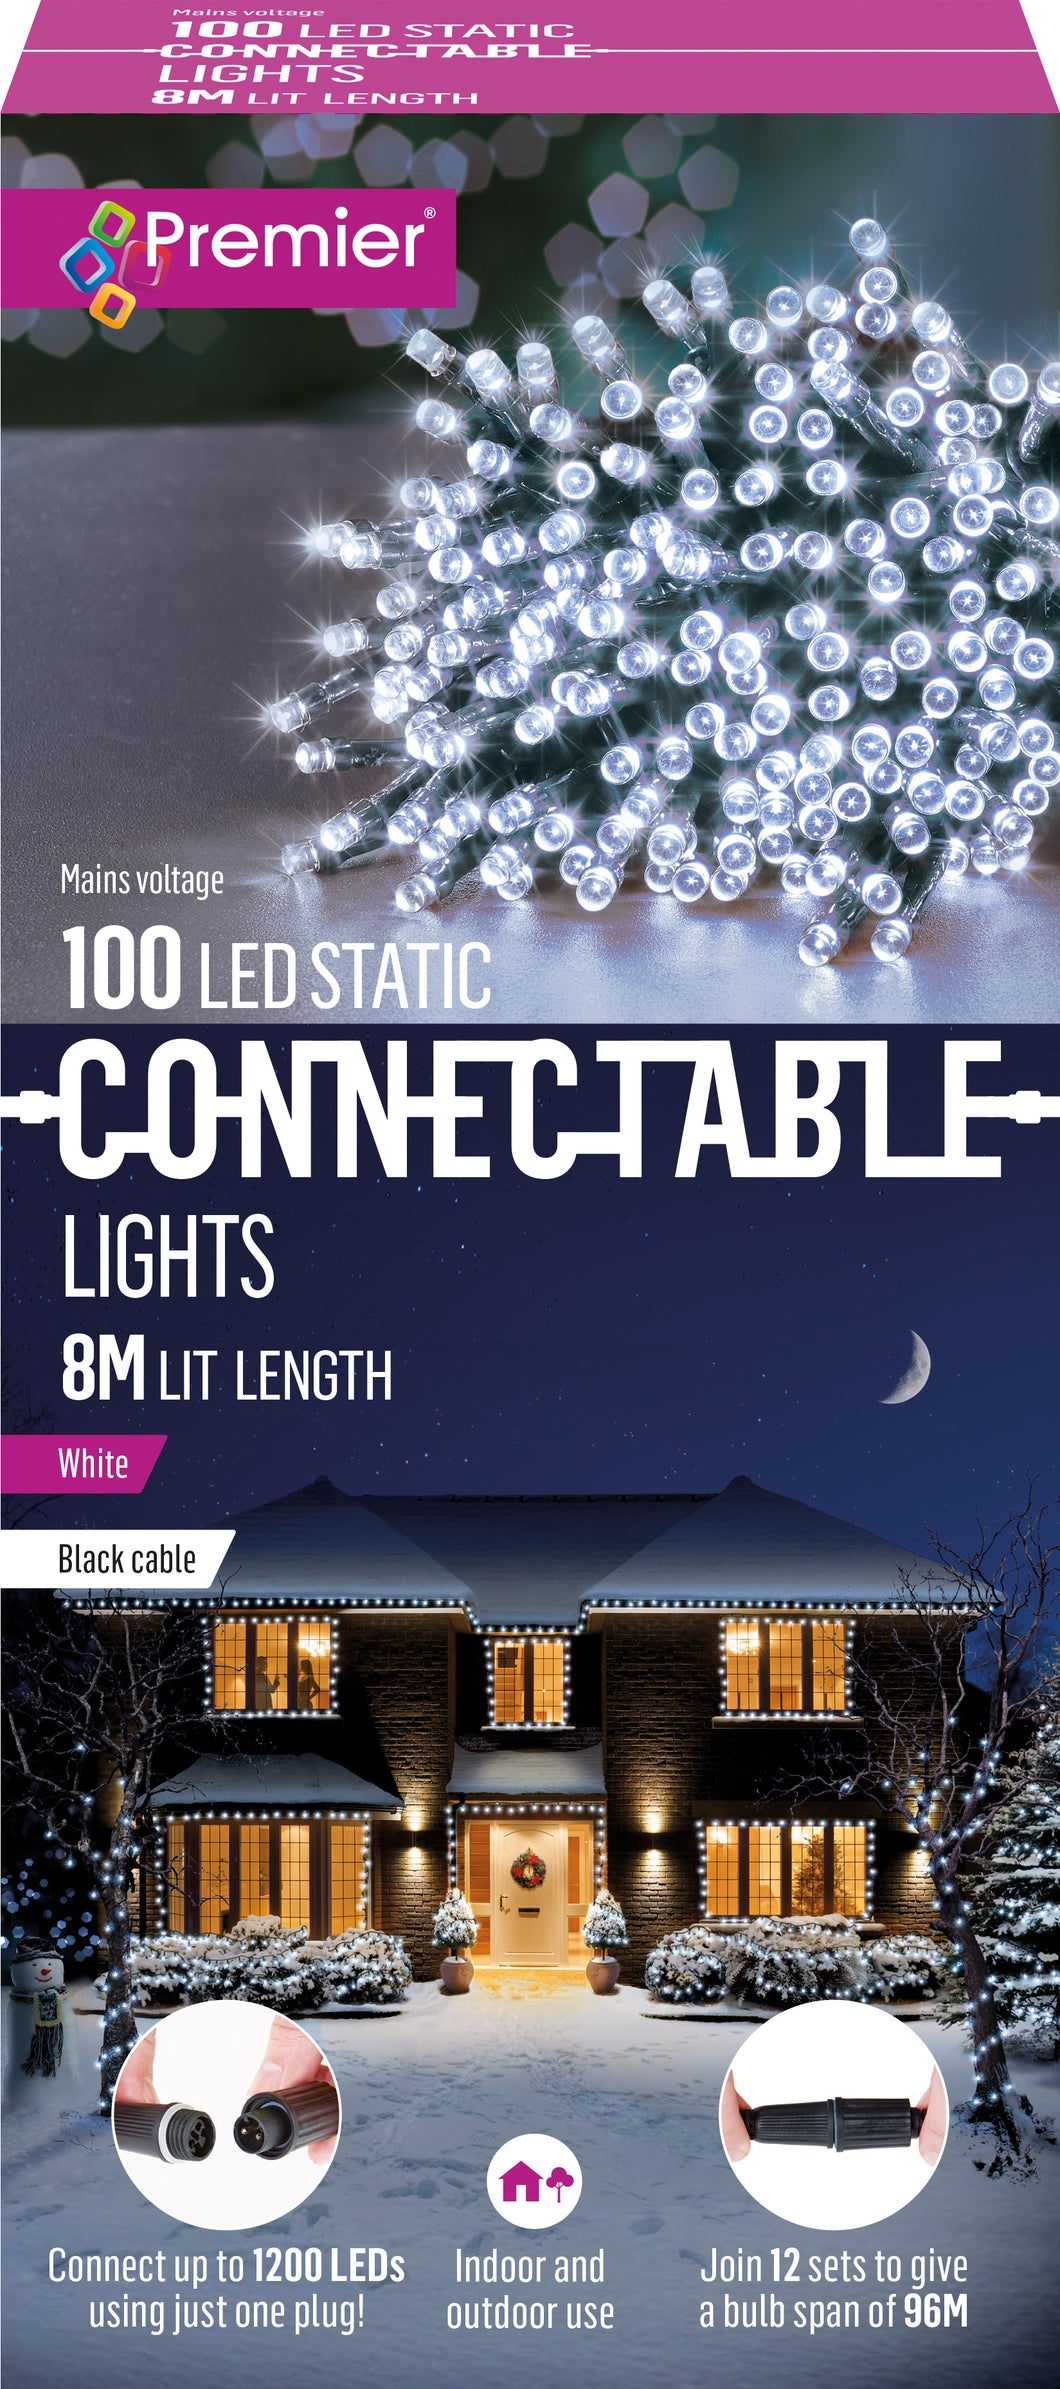 Premier 100 Connectable White LED Lights